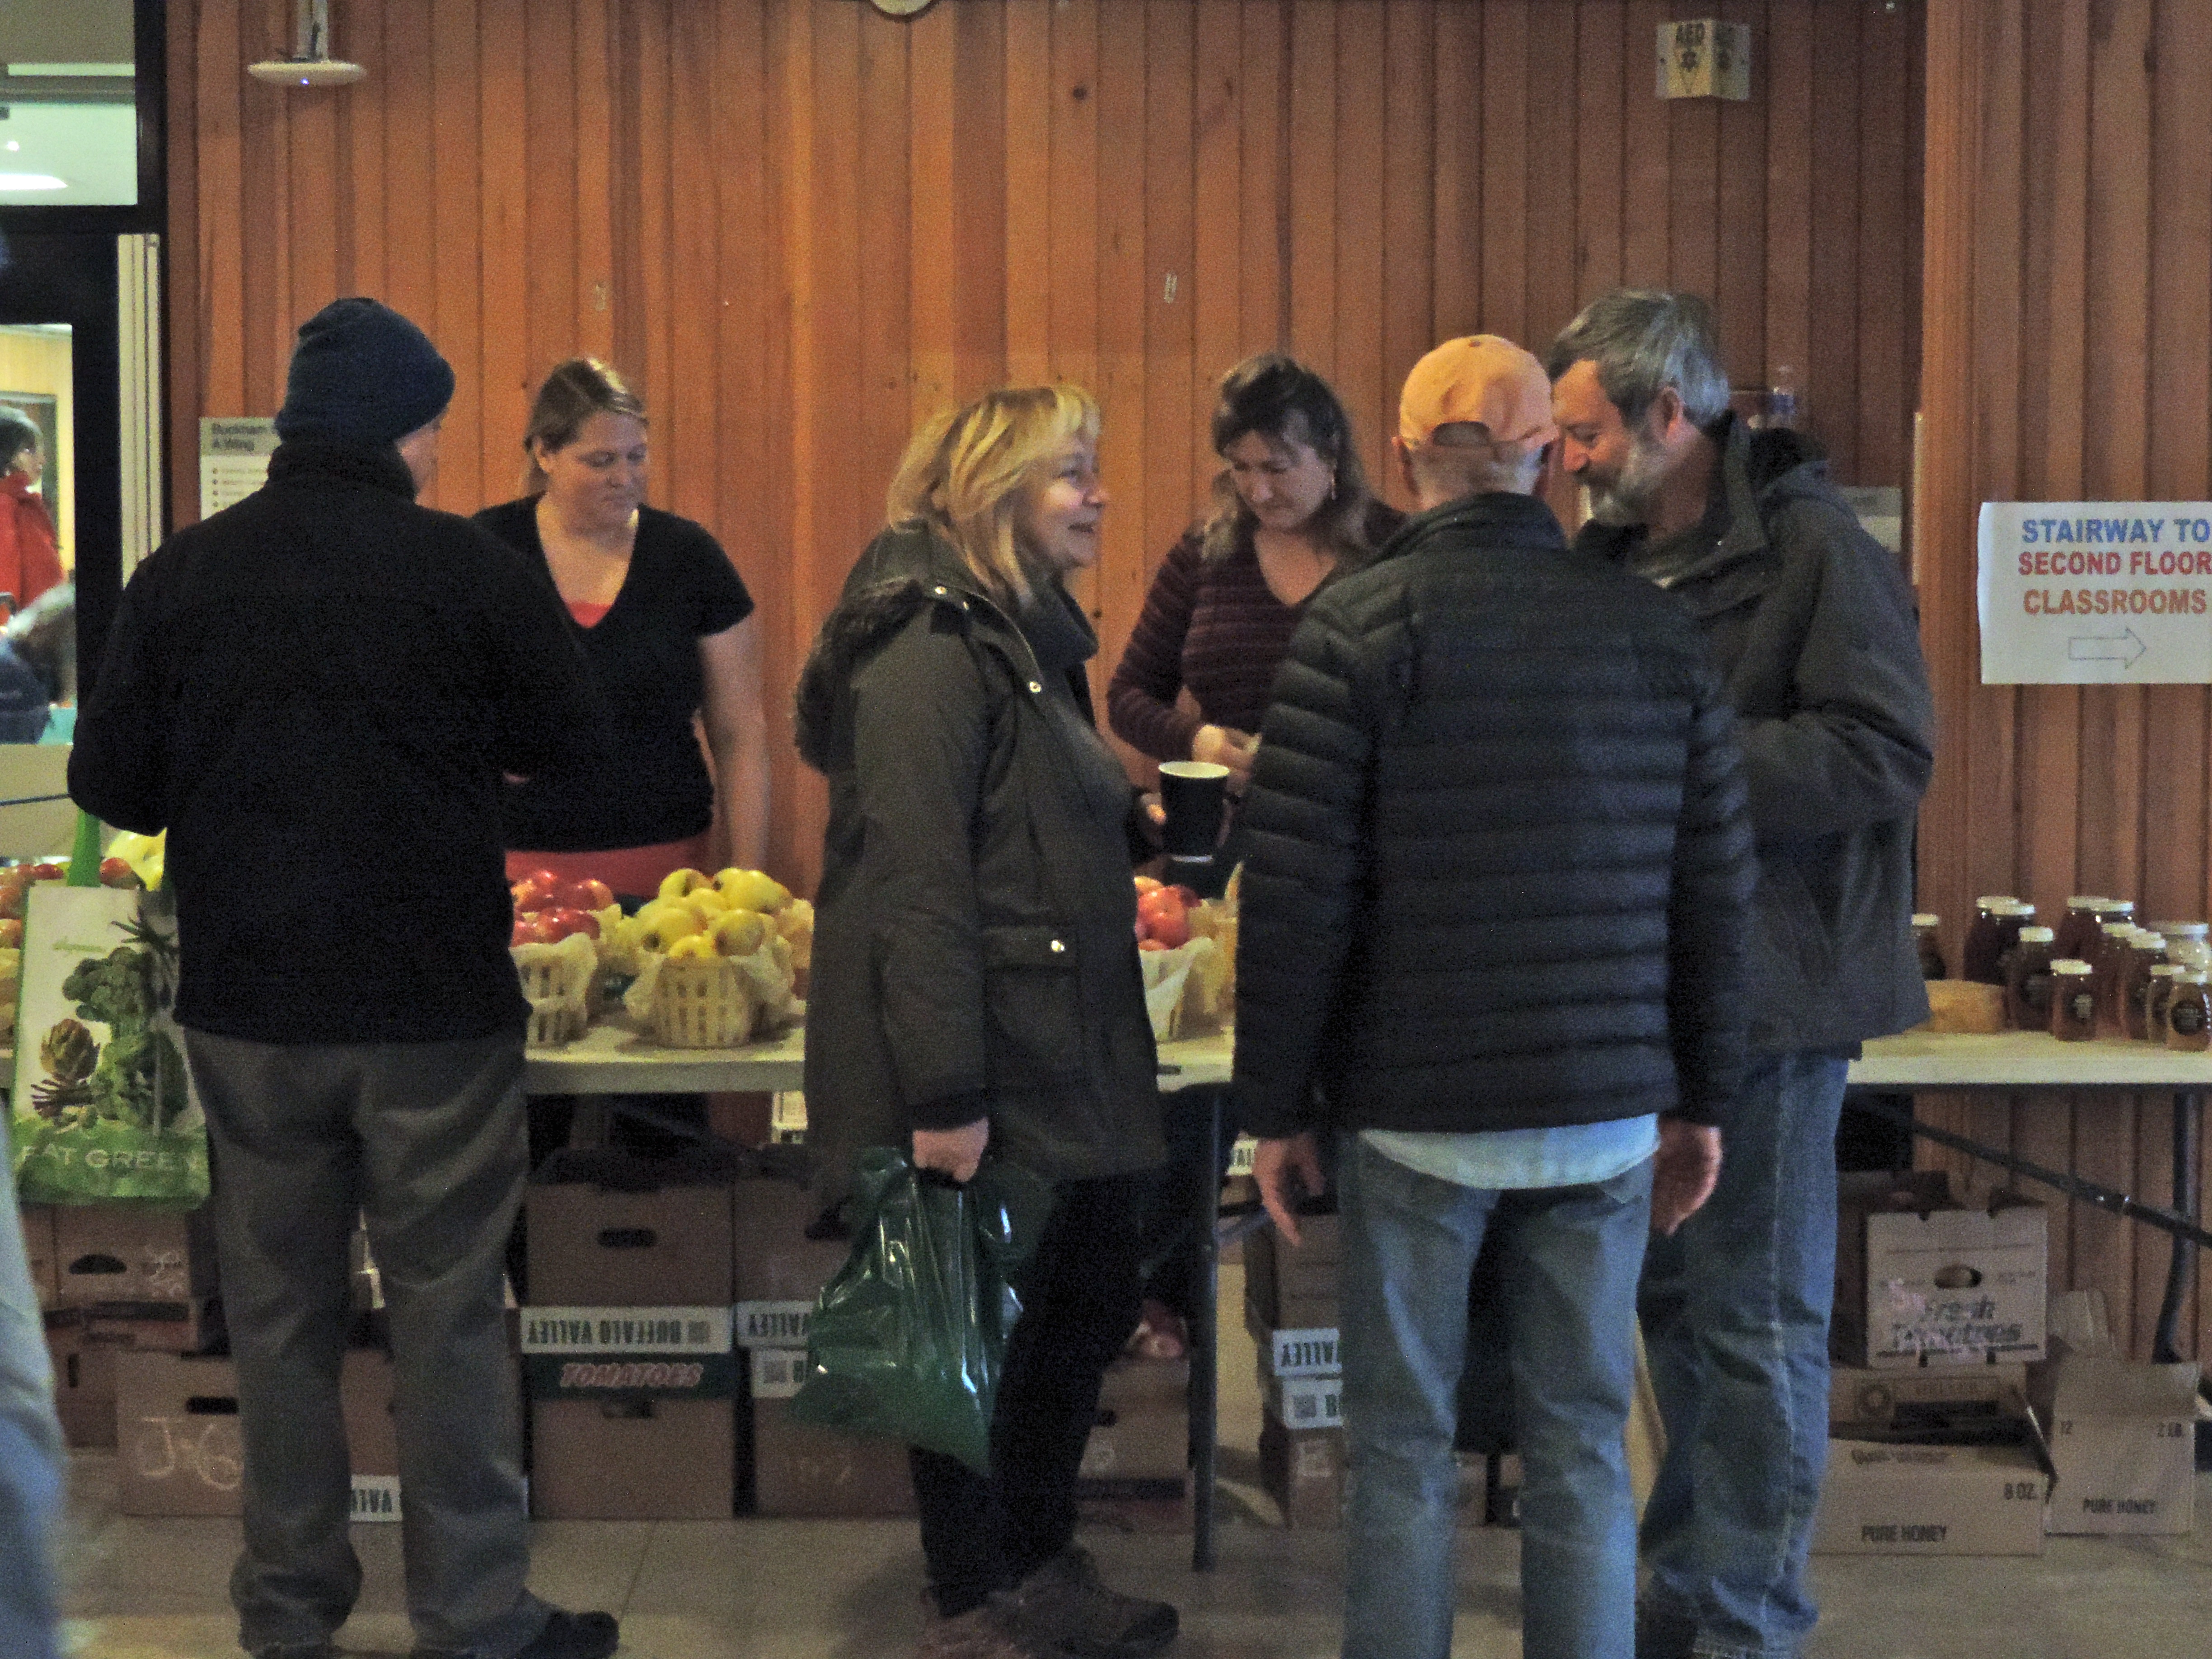 Elmwood Village Winter Market at Buffalo State concludes on April 30